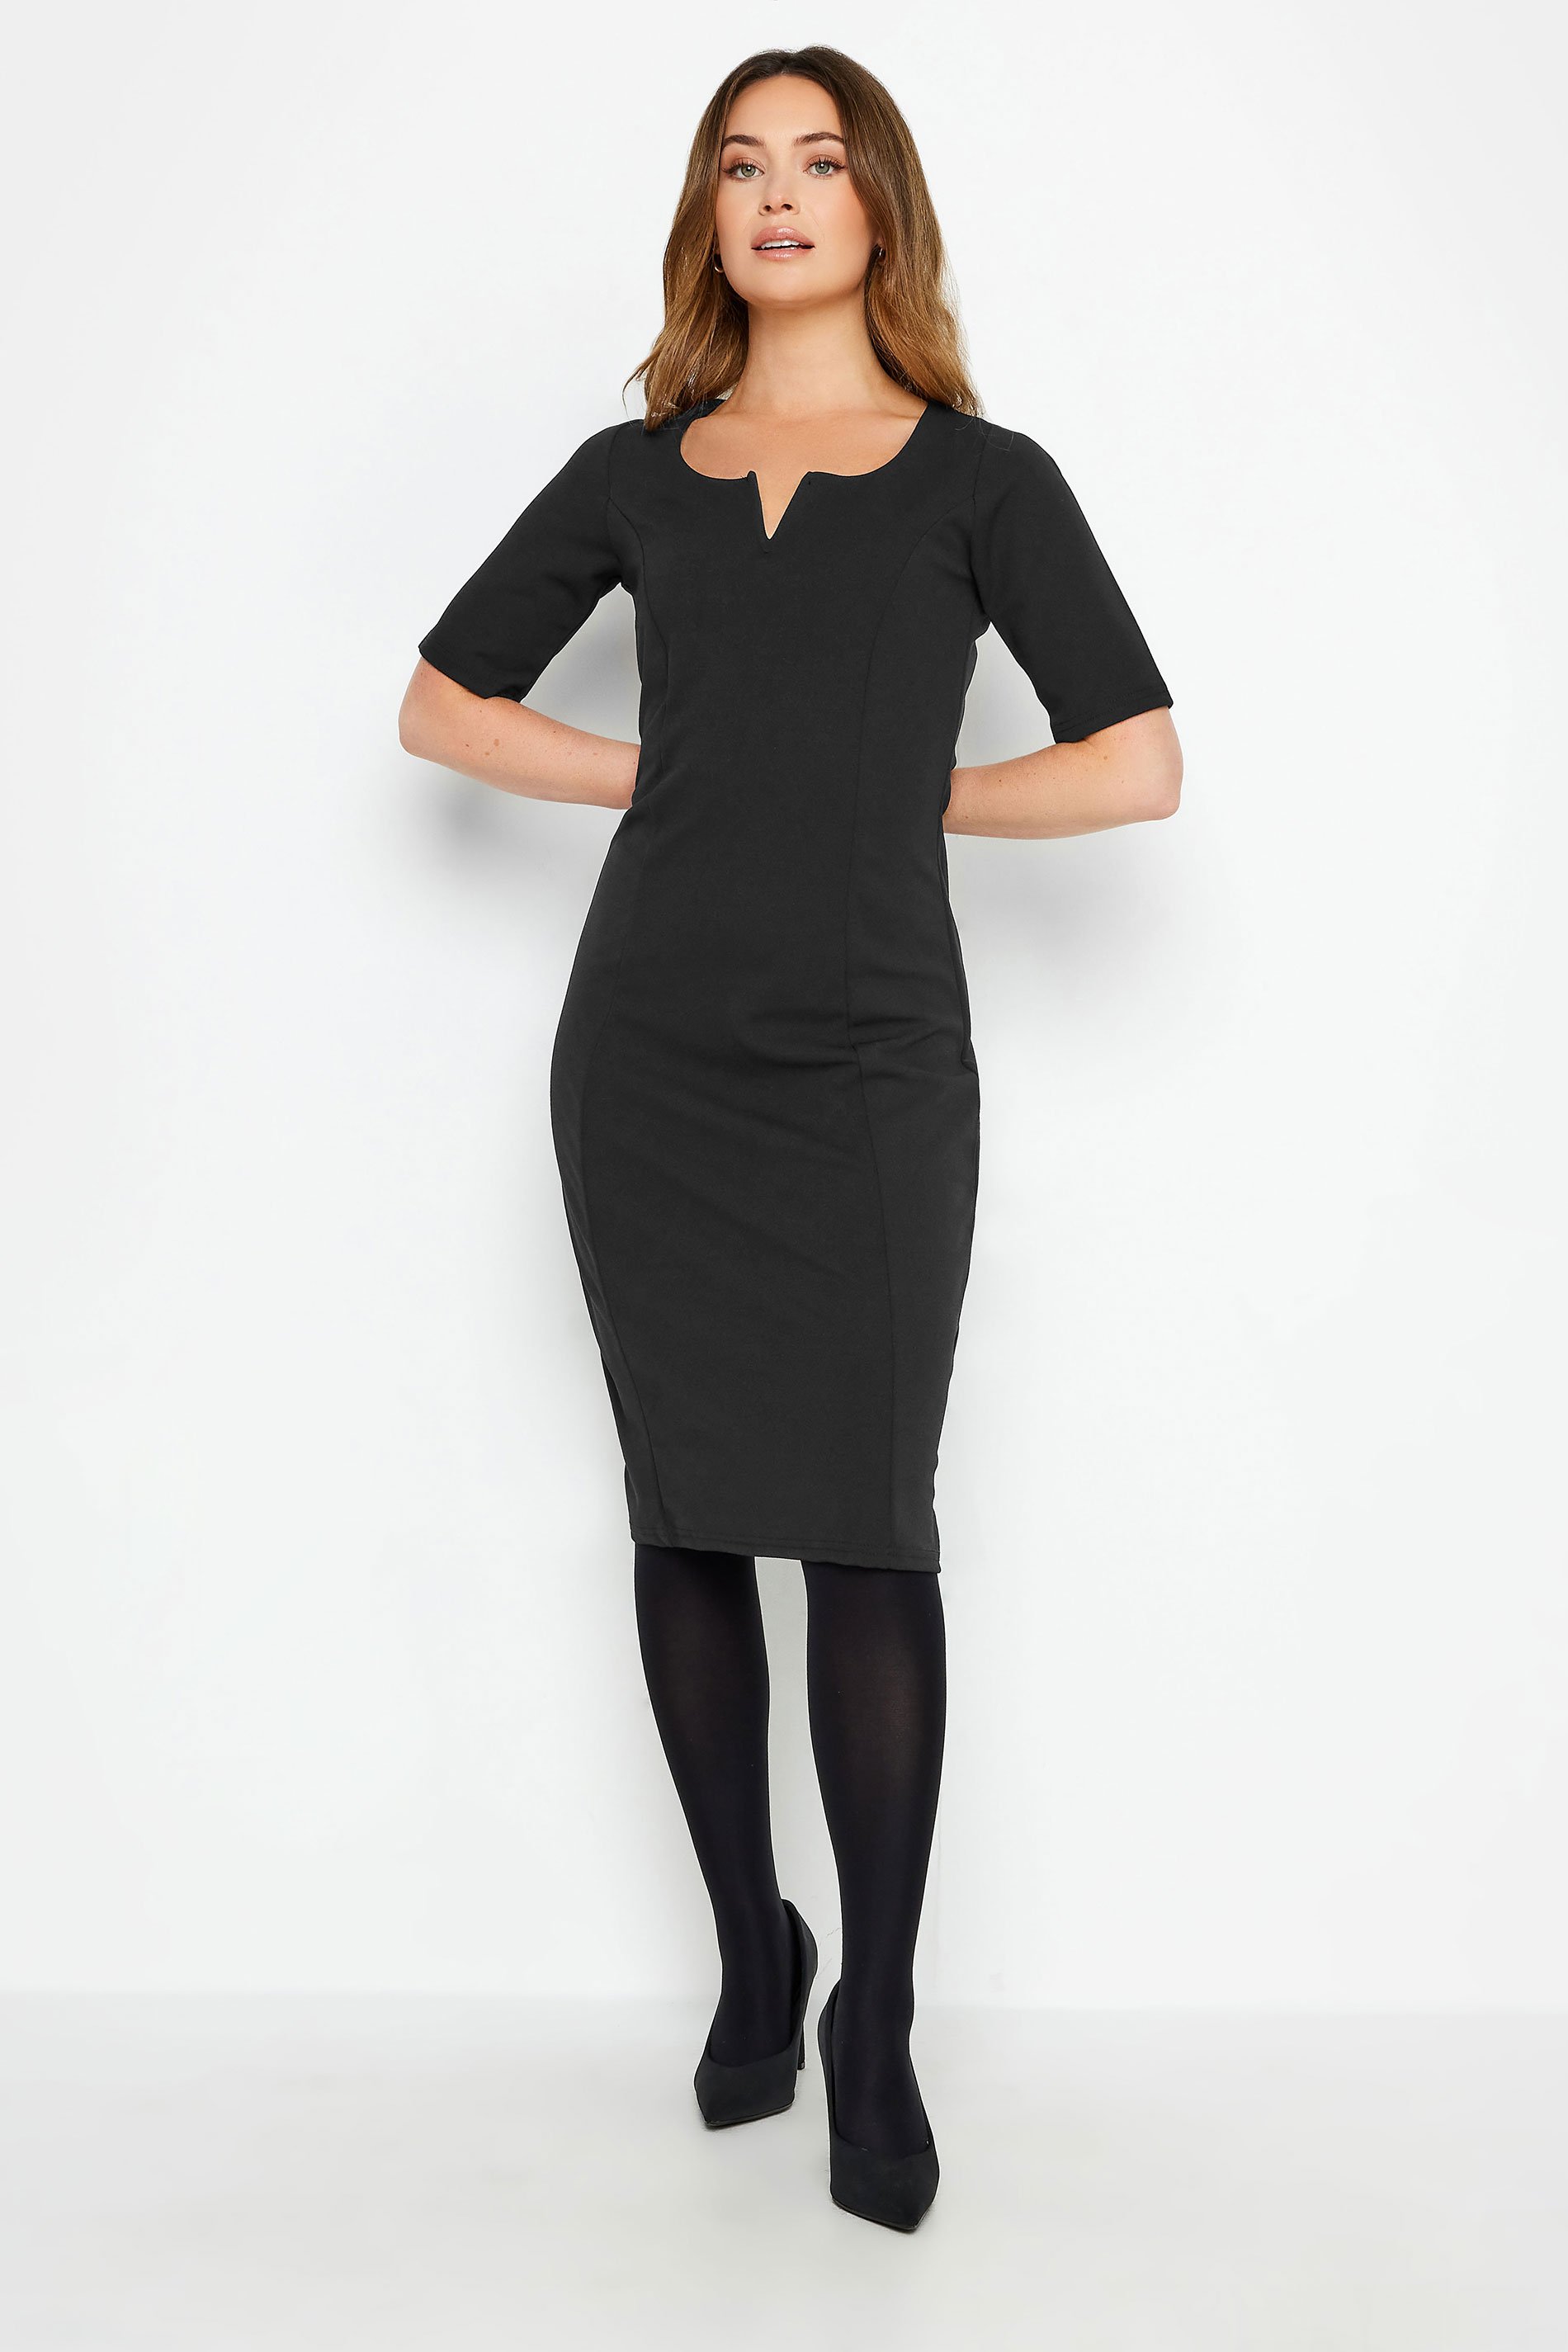 M&Co Petite Black Scuba Notch Neck Midi Dress | M&Co